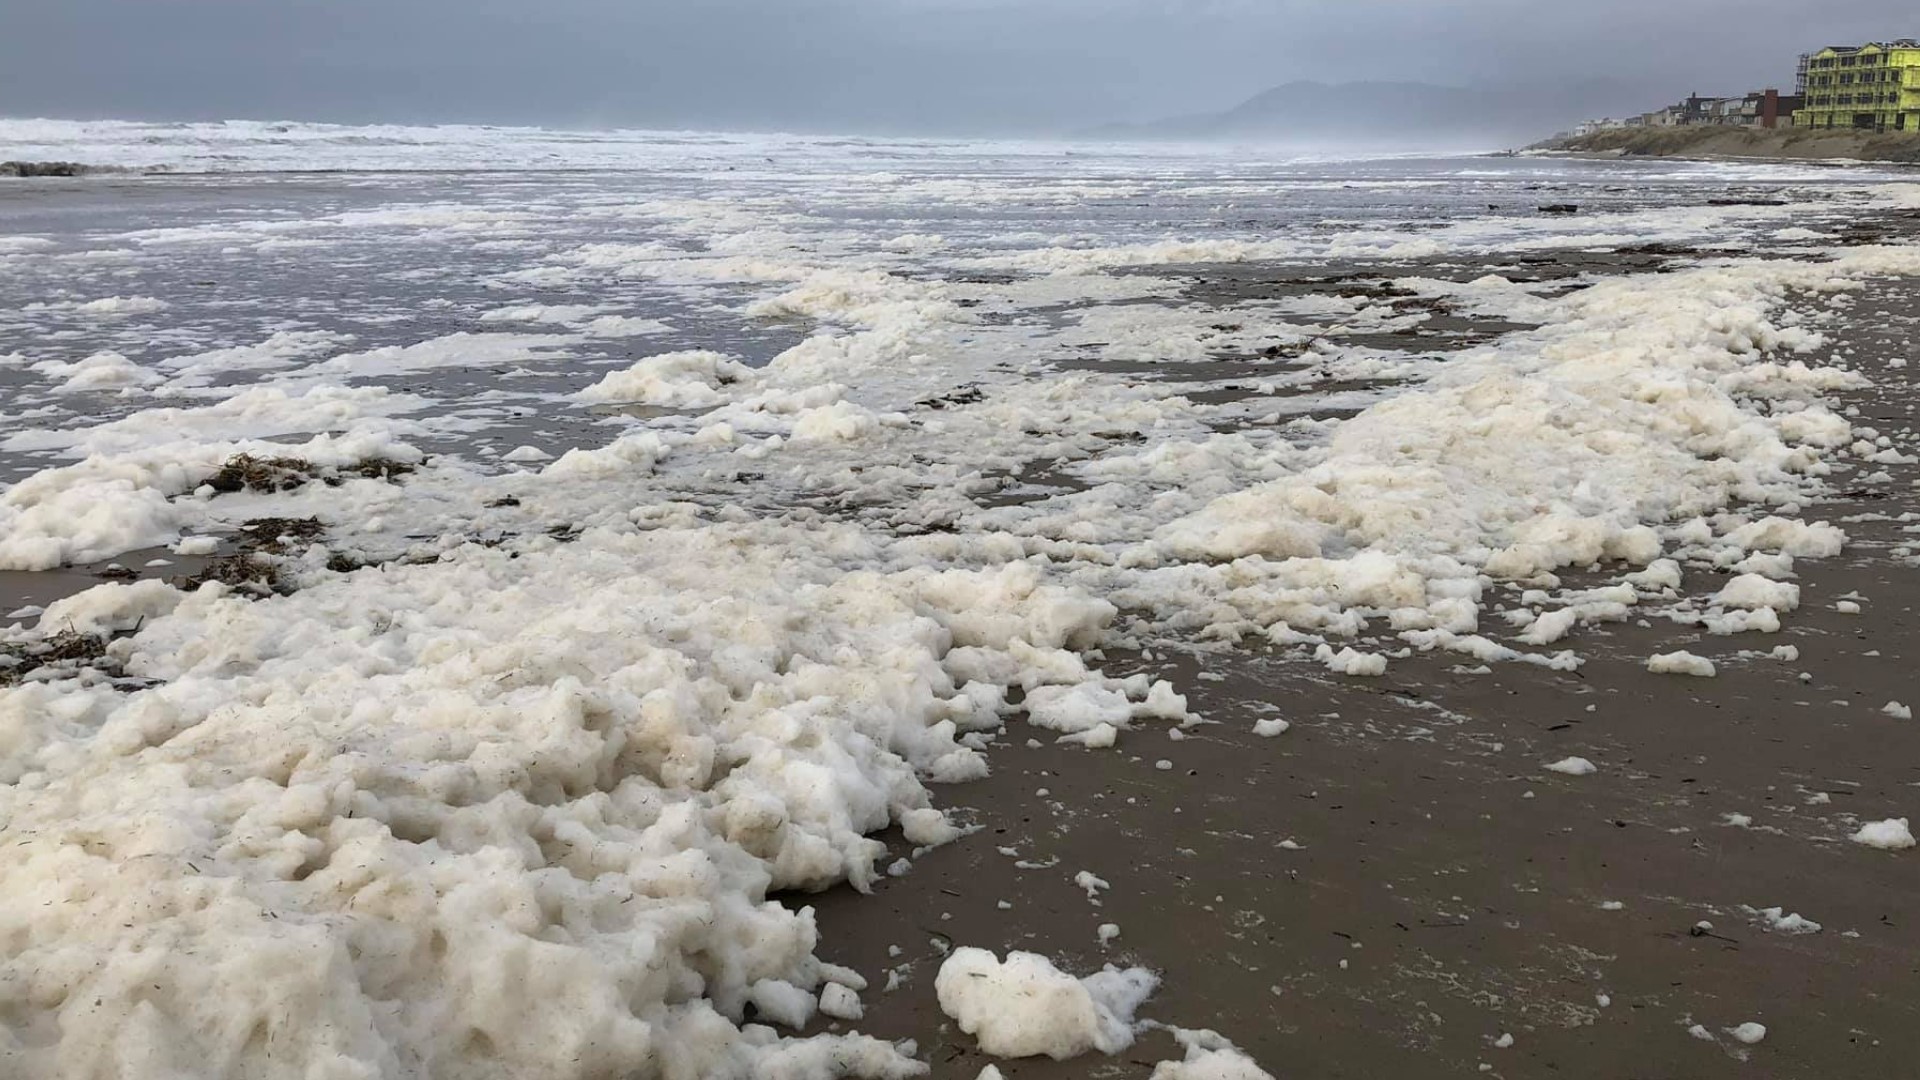 King tides in Oregon show risk of climate change